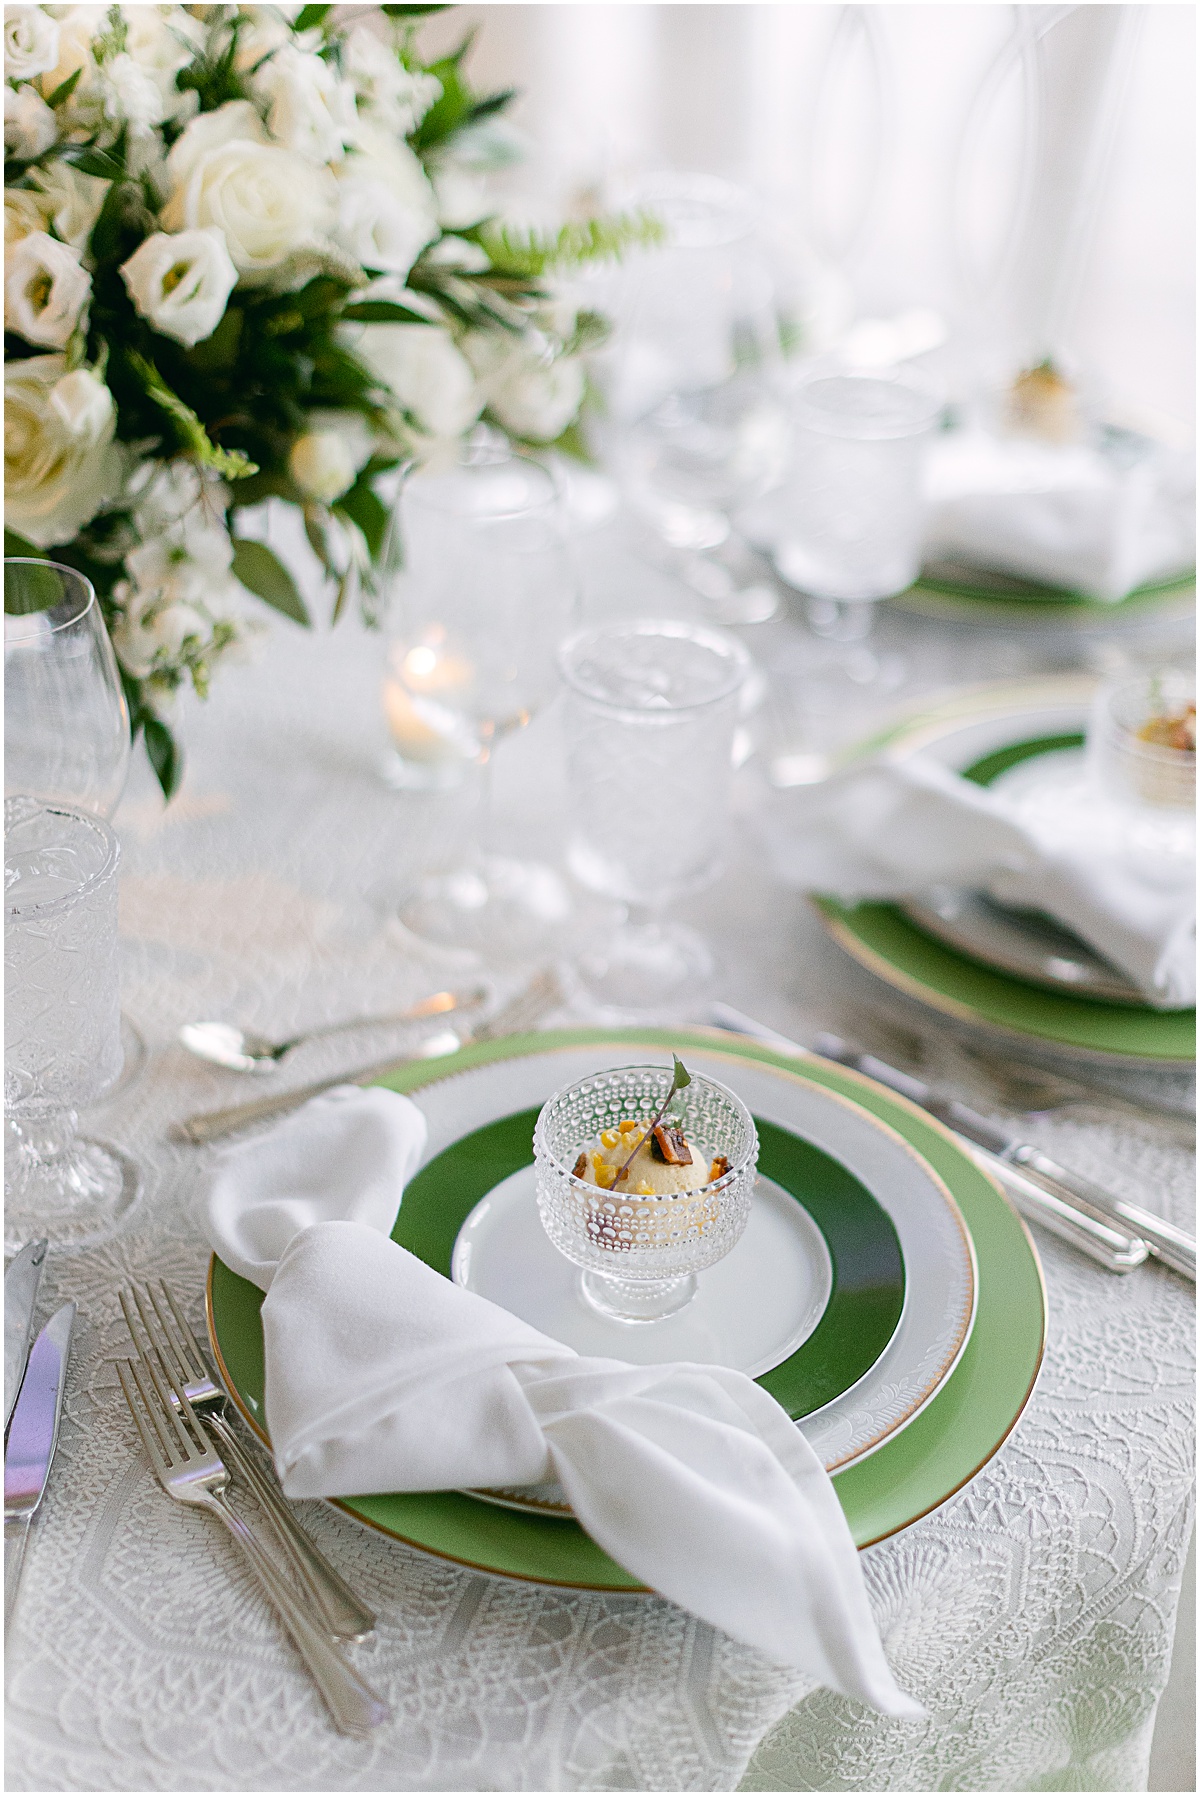 Green plates at lemon-themed wedding at Congressional Country Club by Sarah Bradshaw